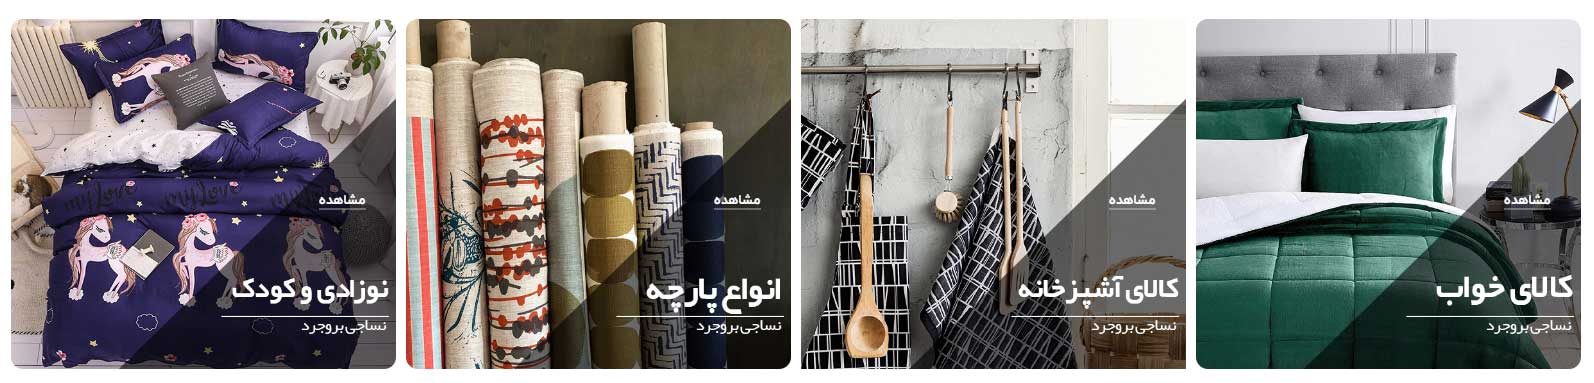 borujerd-textile-products.jpg